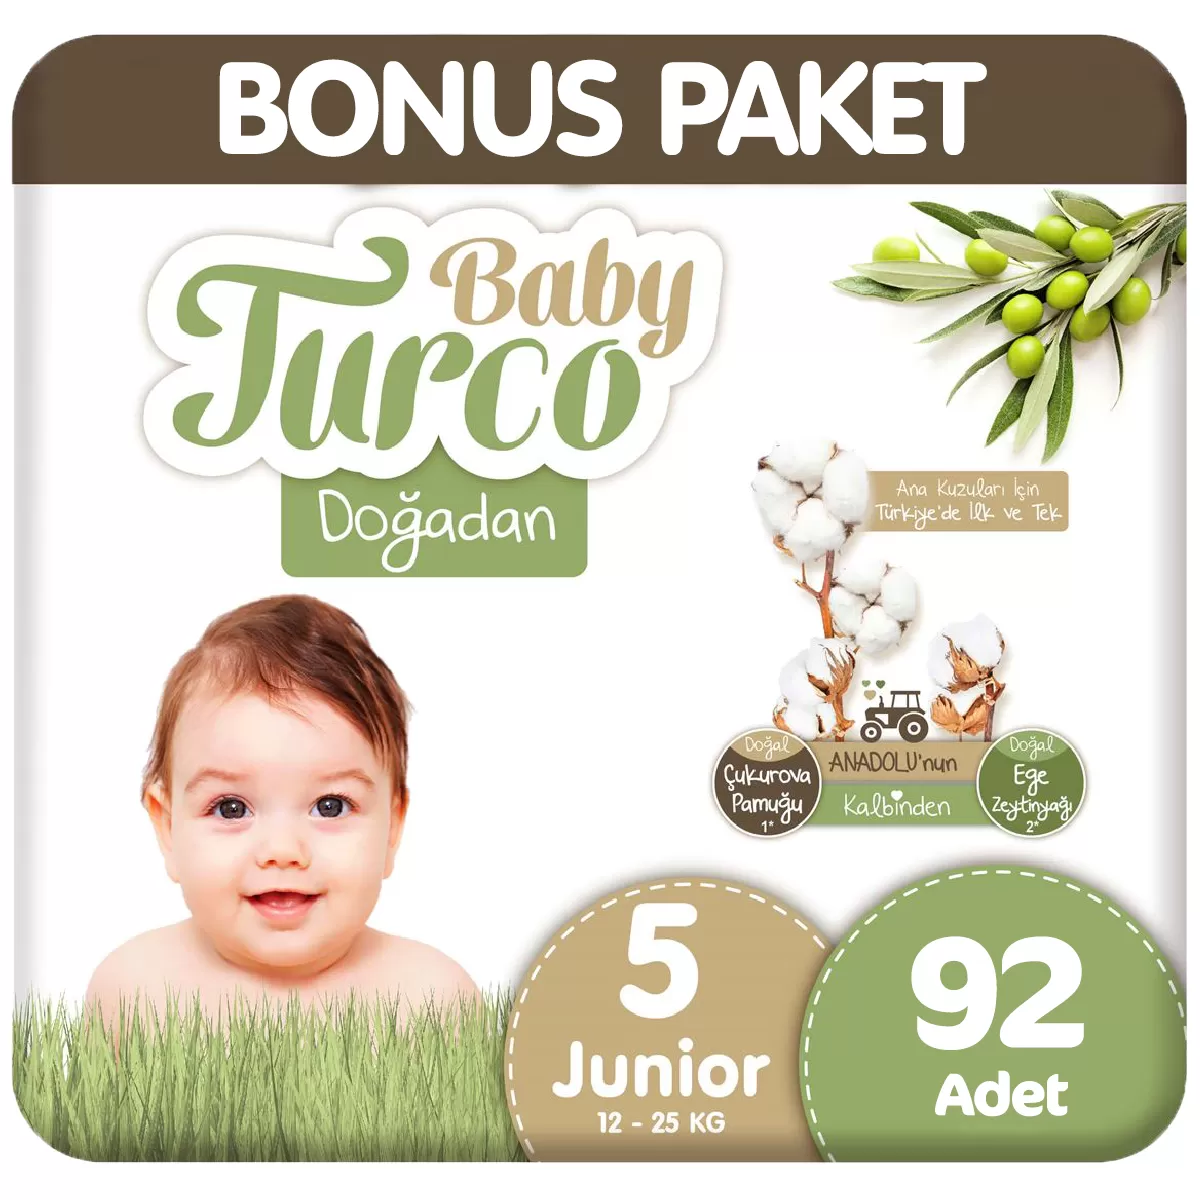 Baby Turco Doğadan Bonus Paket Bebek Bezi 5 Beden 92 Adet